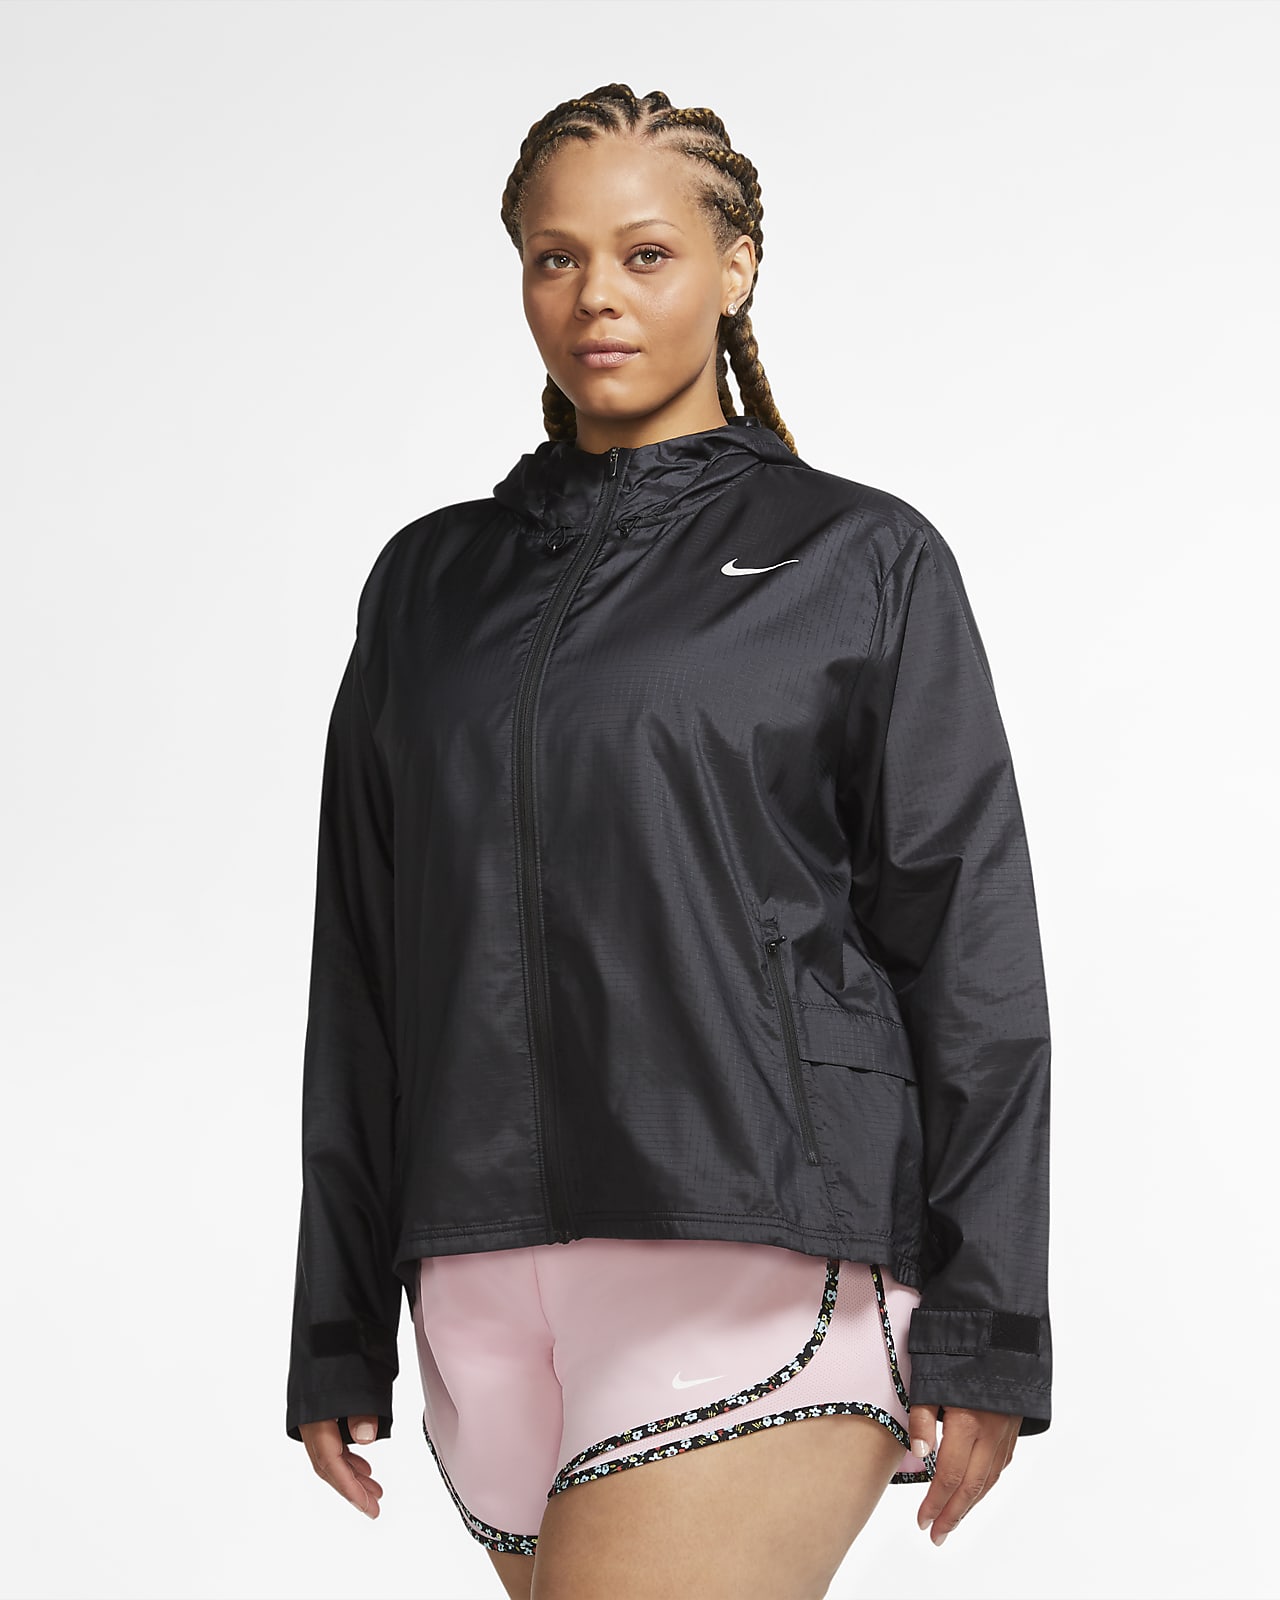 Löparjacka Nike Essential för kvinnor (Plus size)